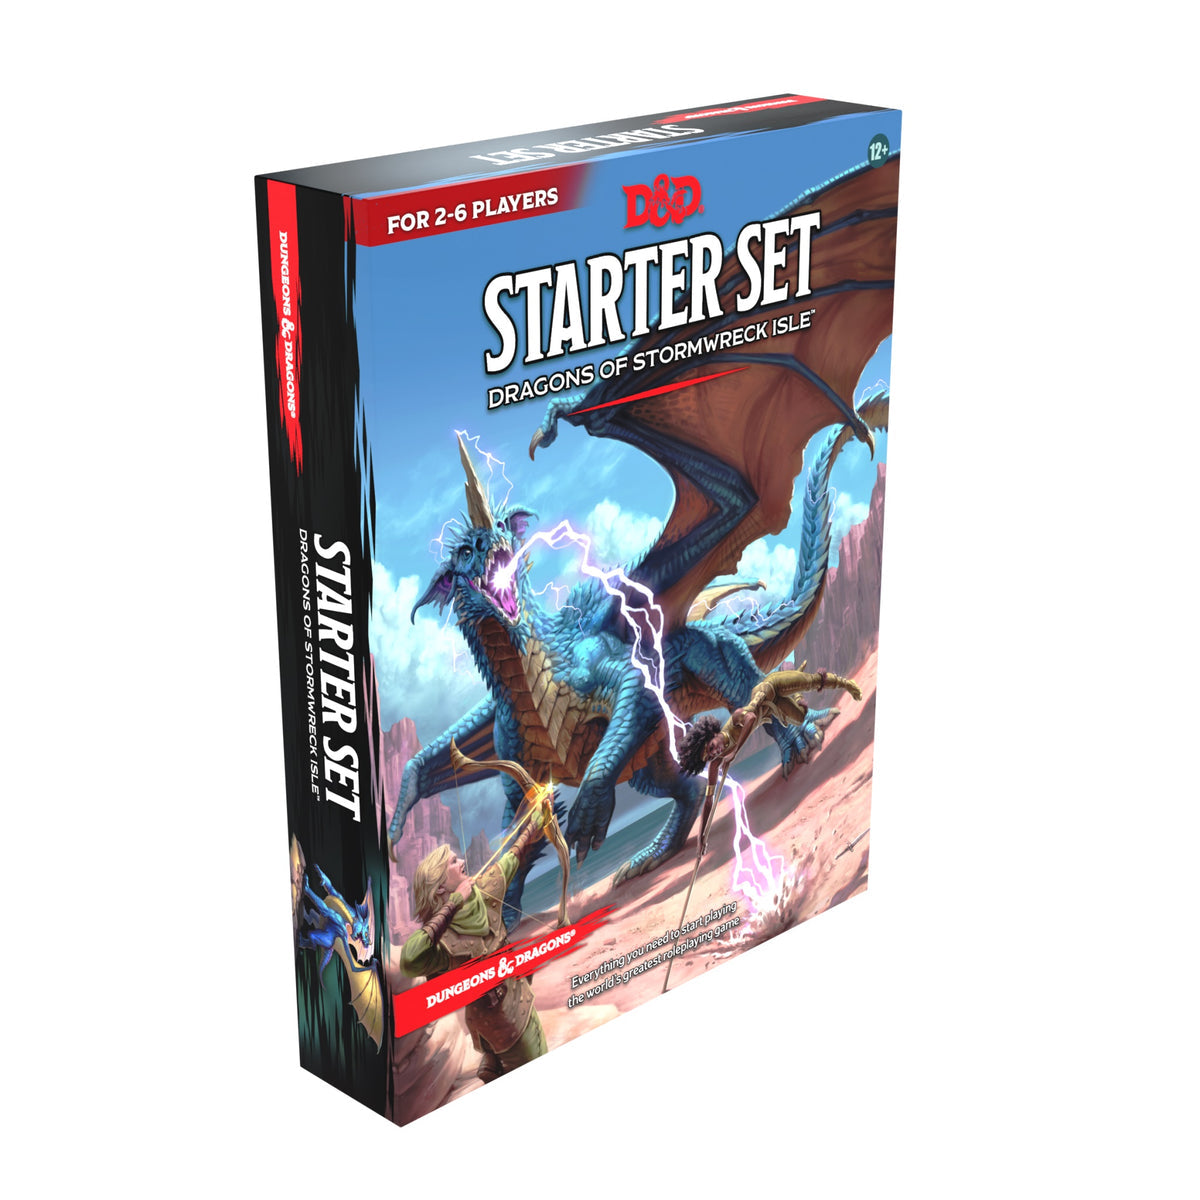 5e D&D Starter Set: Dragons of Stormwreck Isle | Pandora's Boox